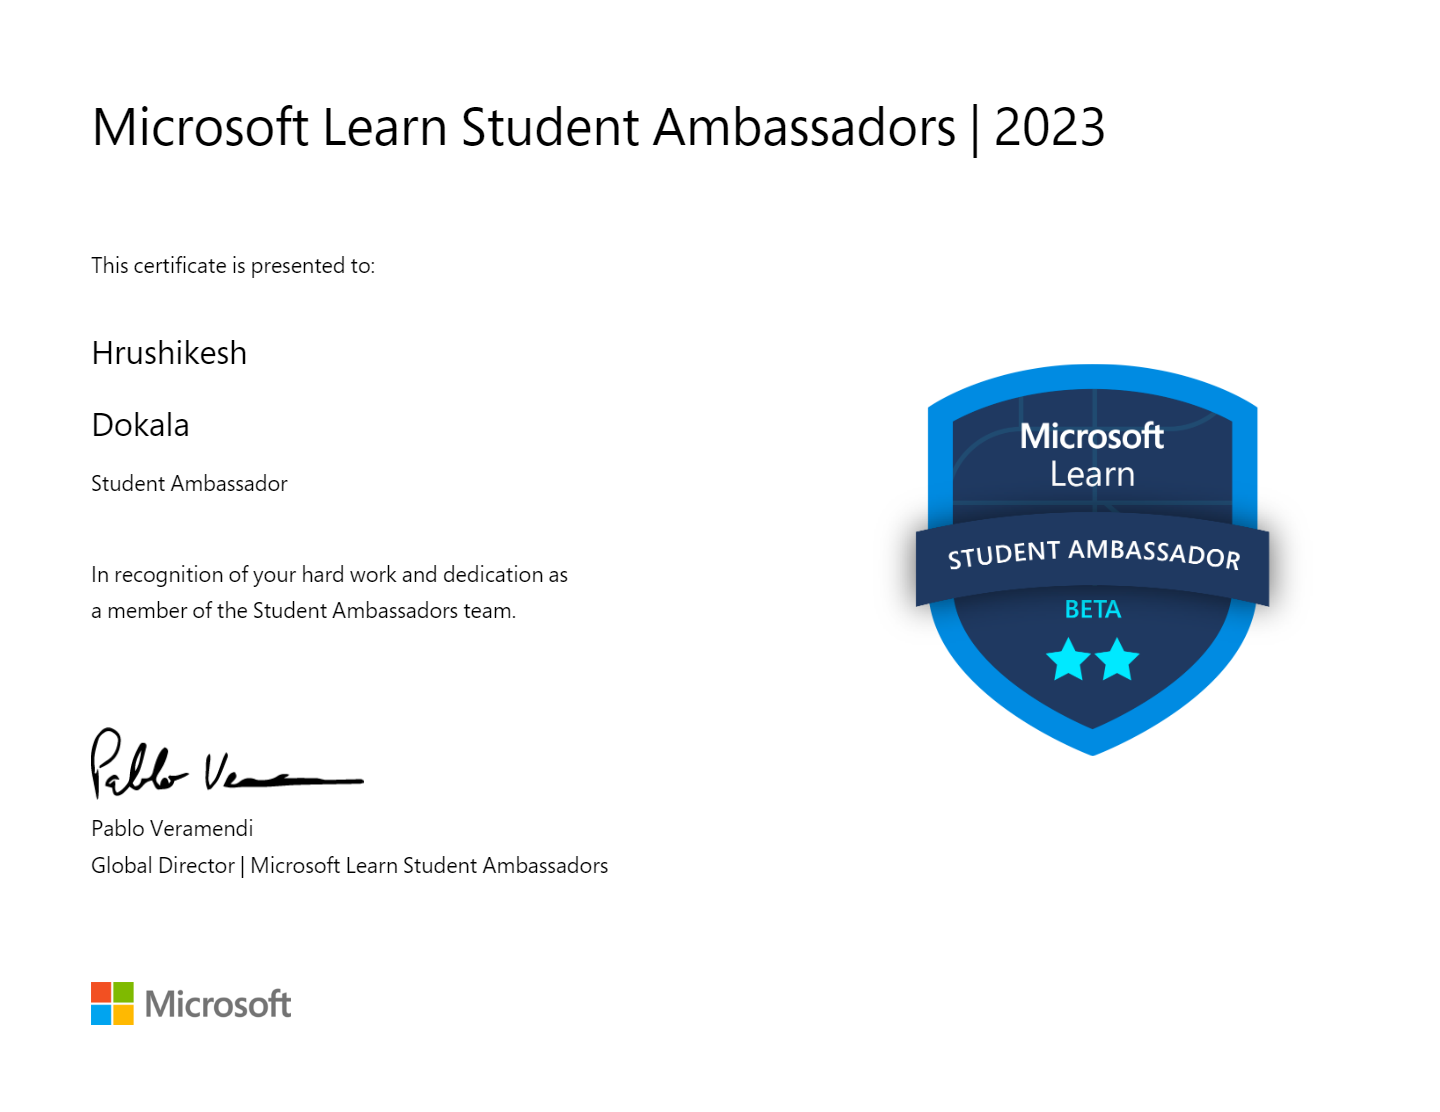 Beta Microsoft Learn Student Ambassador